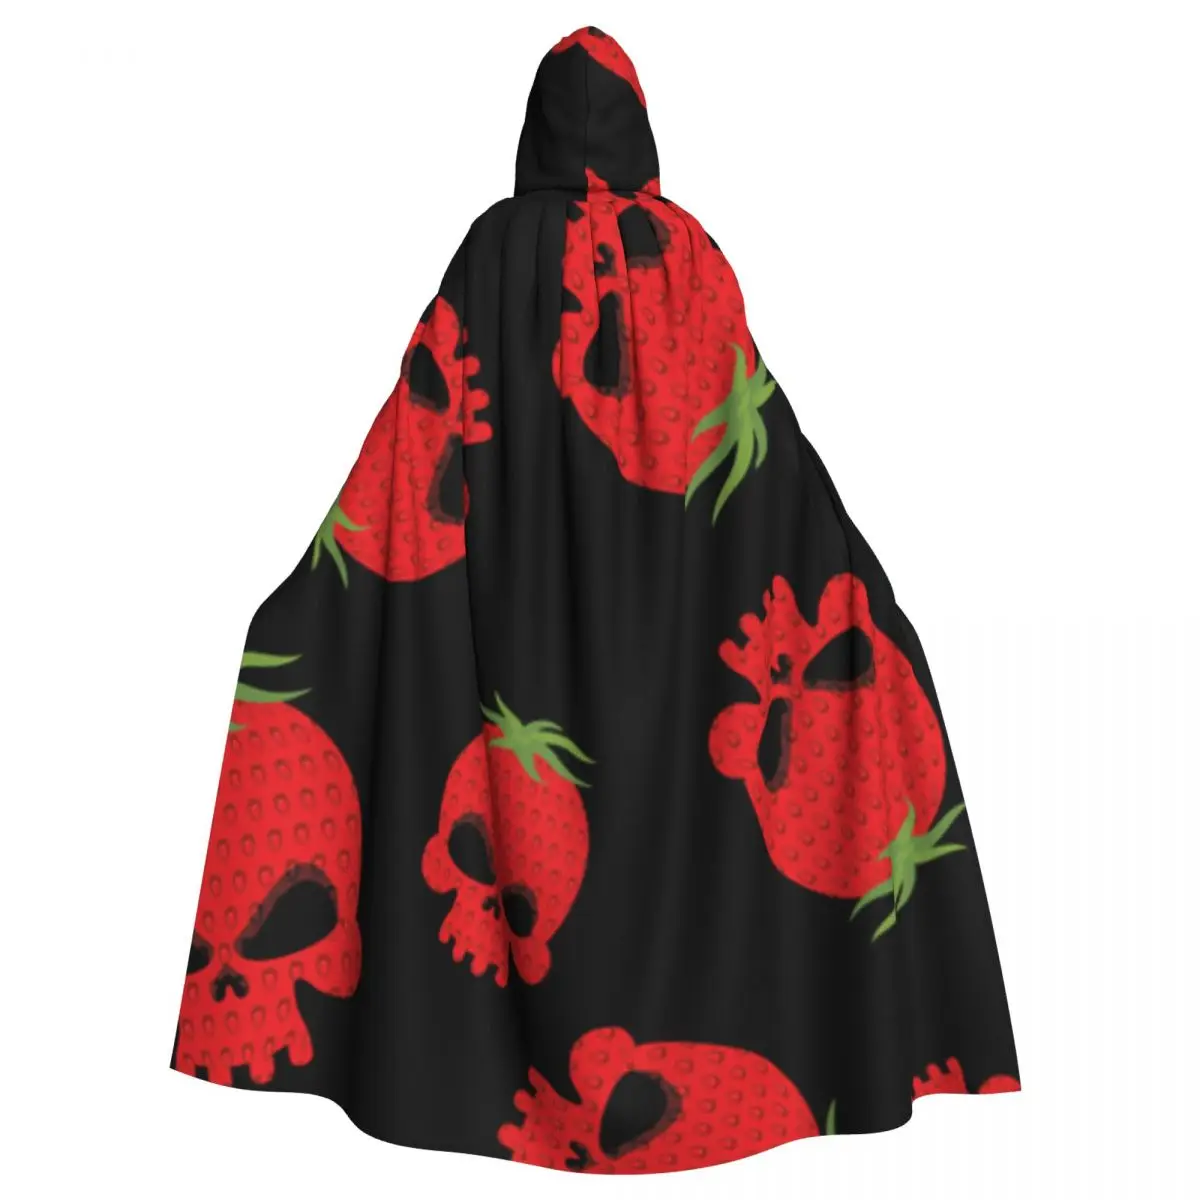 

Long Cape Cloak Strawberry Skull Hooded Cloak Coat Autumn Hoodies